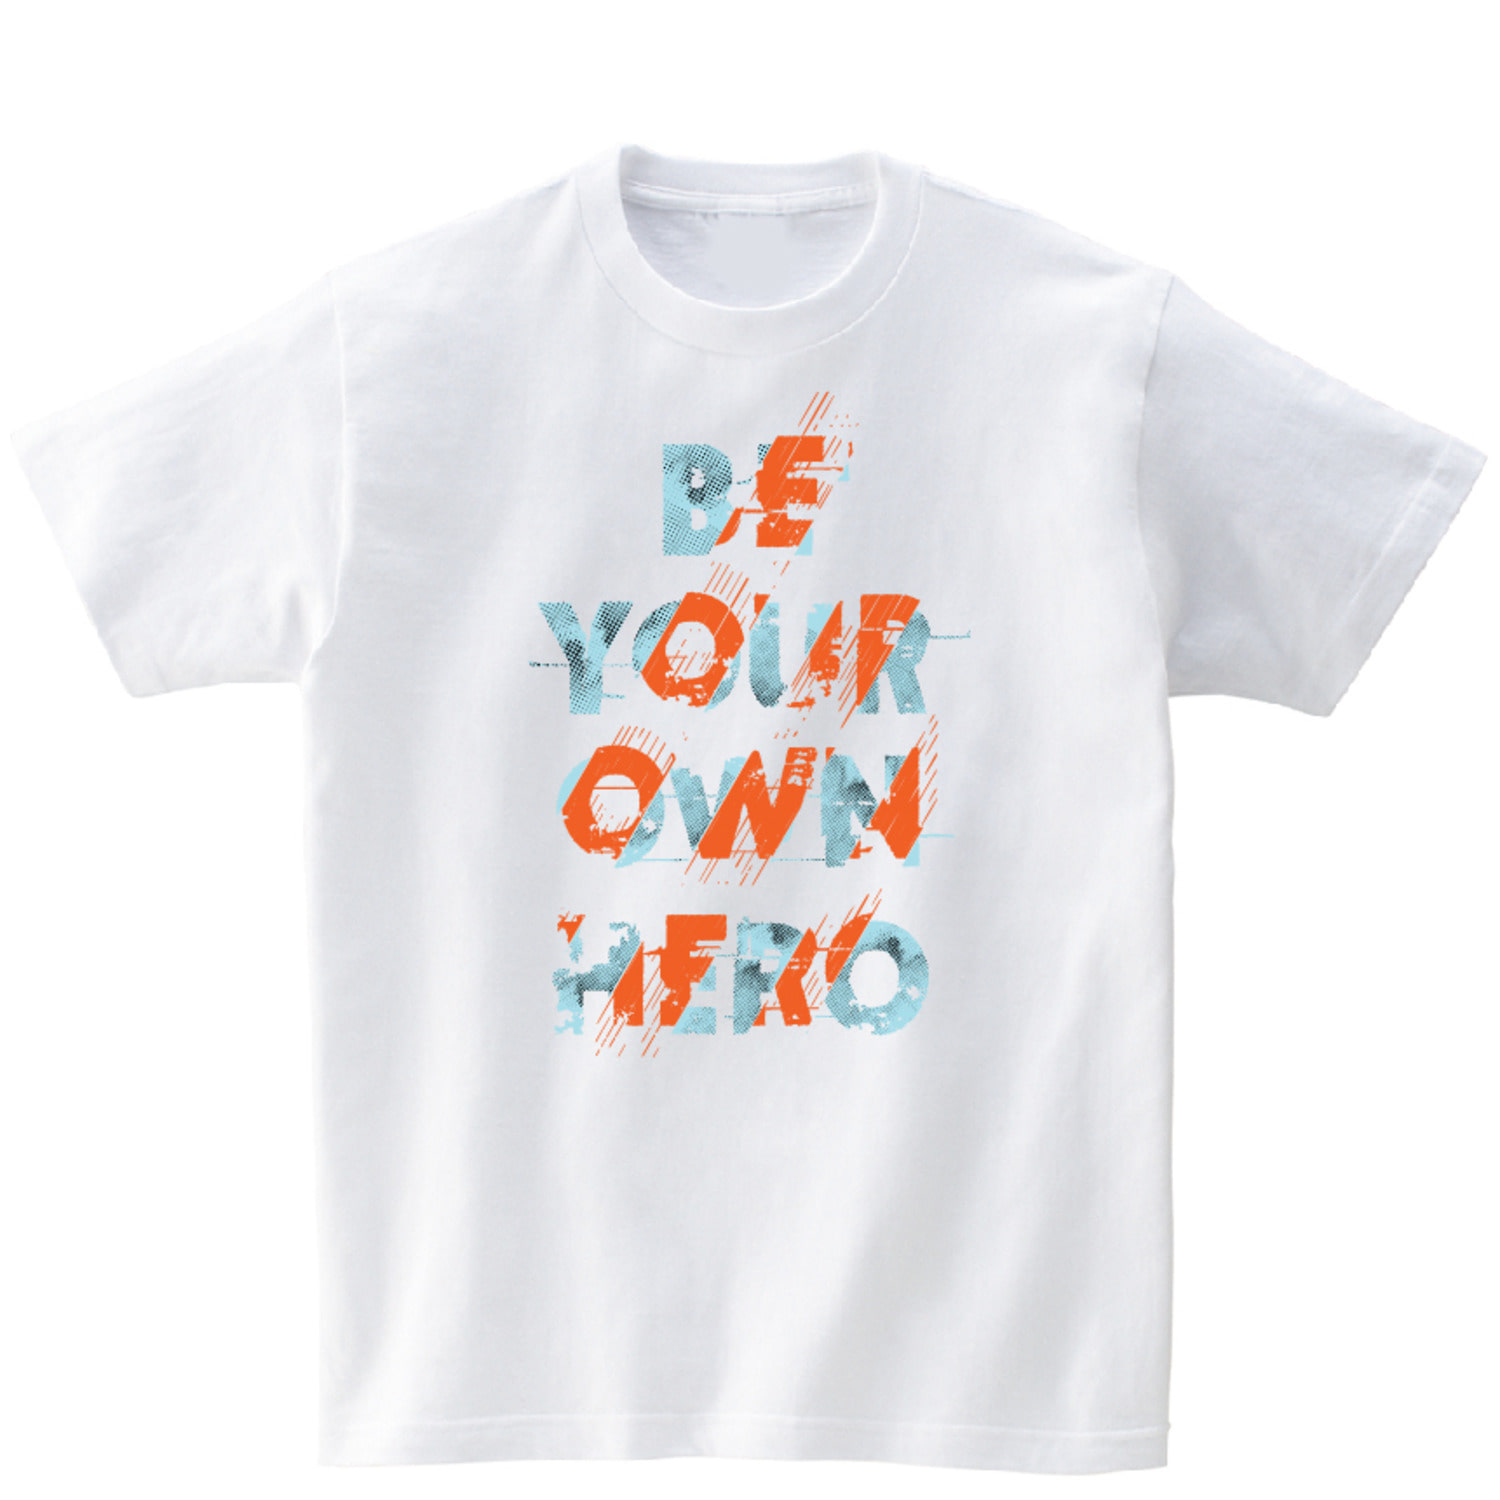 BE YOUR OWN HERO 반팔 그래픽 티셔츠 기본 typo.02